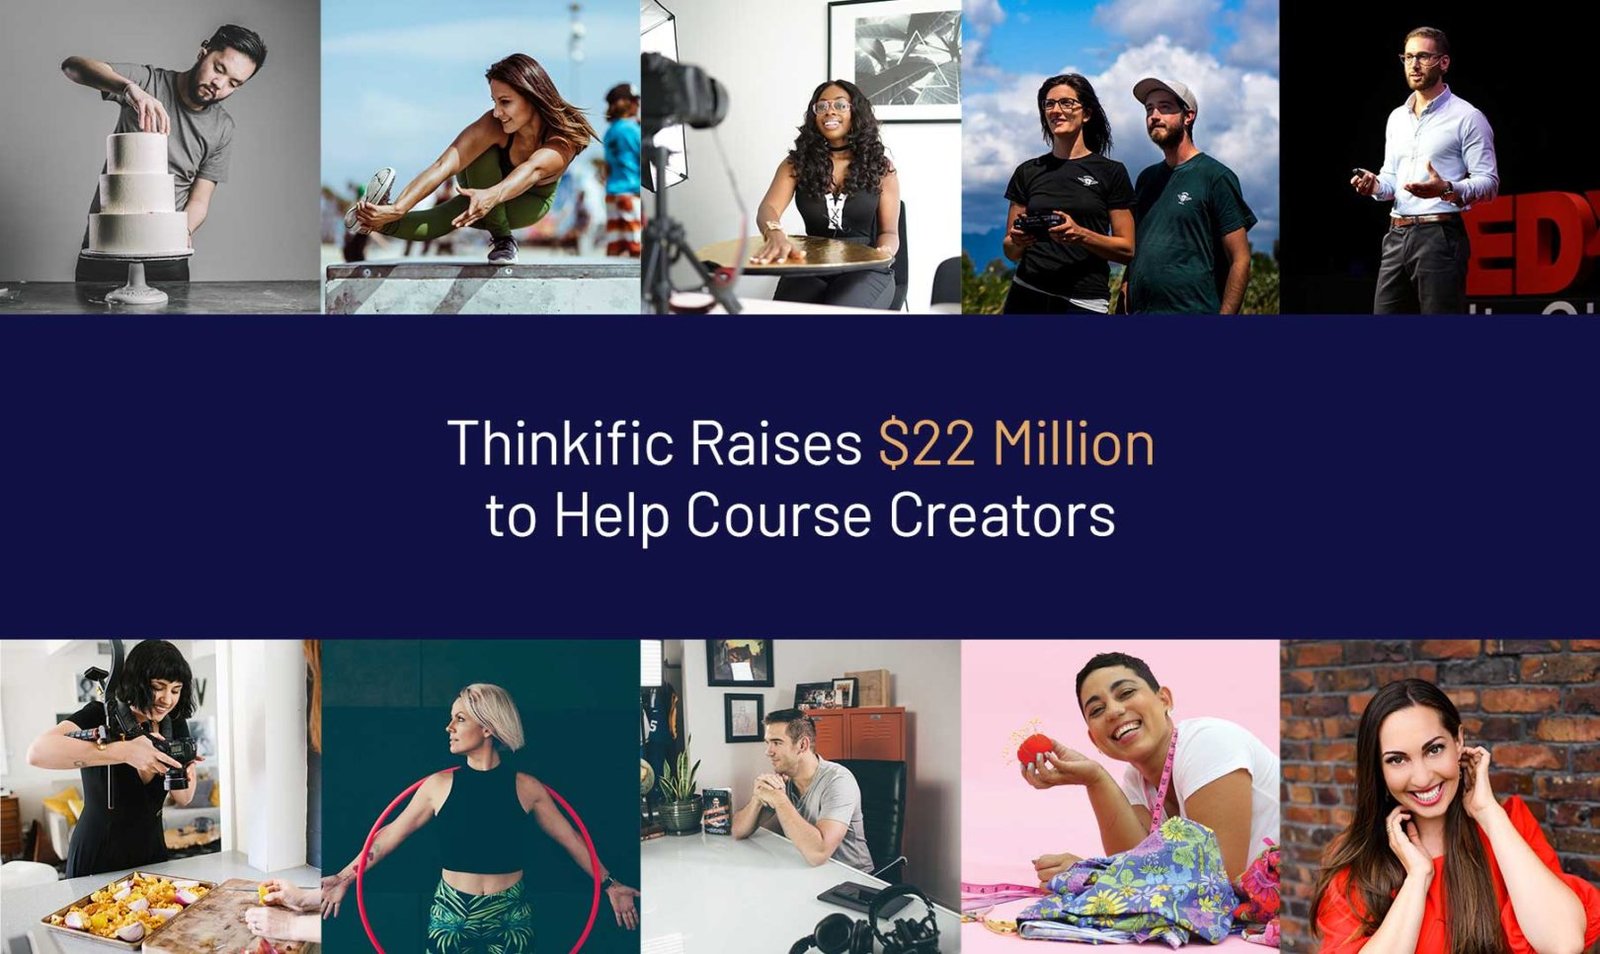 Thinkific raises 22M